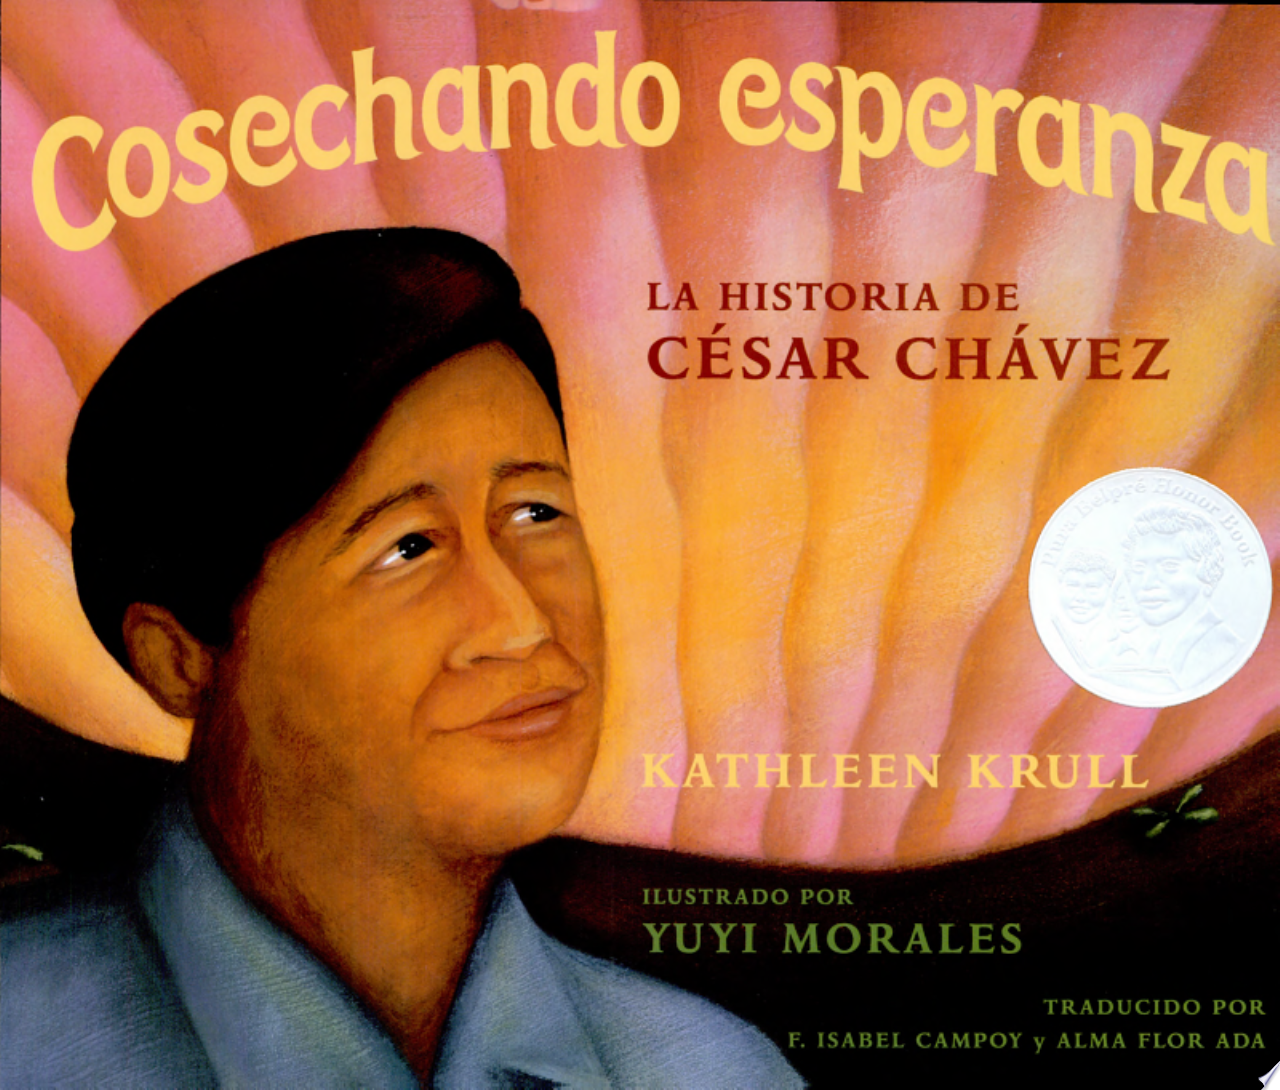 Image for "Cosechando Esperanza"